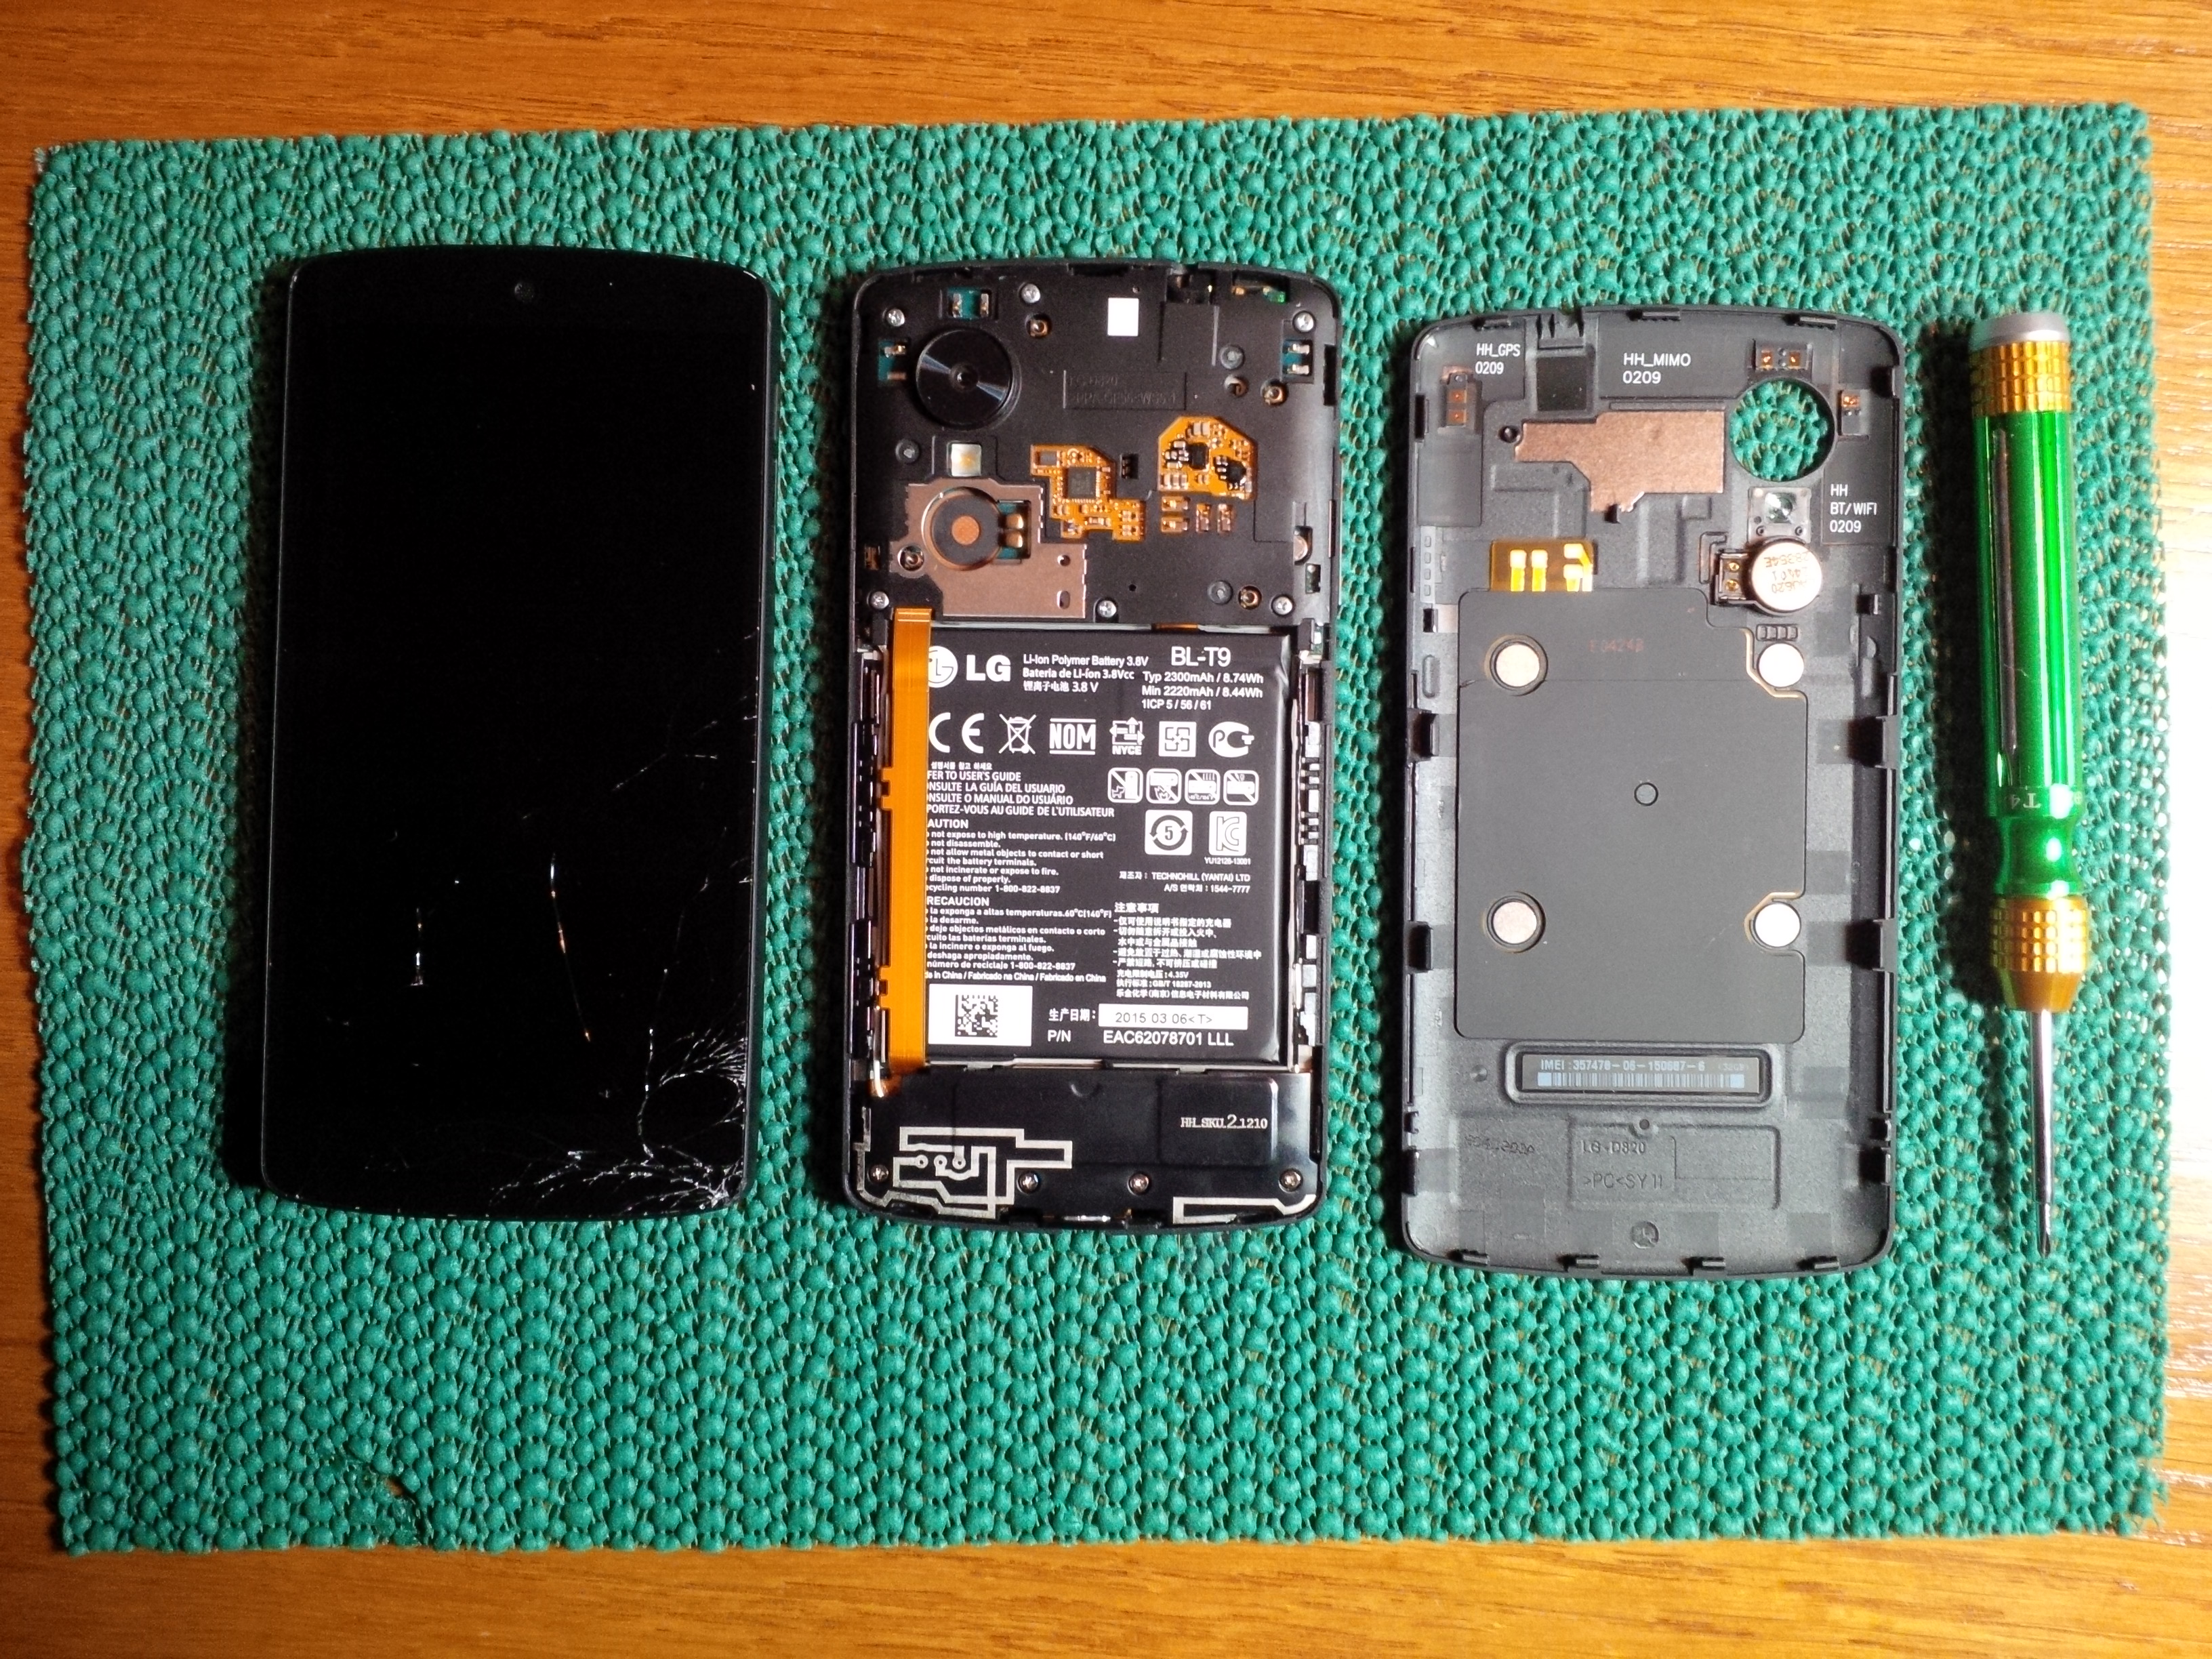 Nexus 5 Stripped